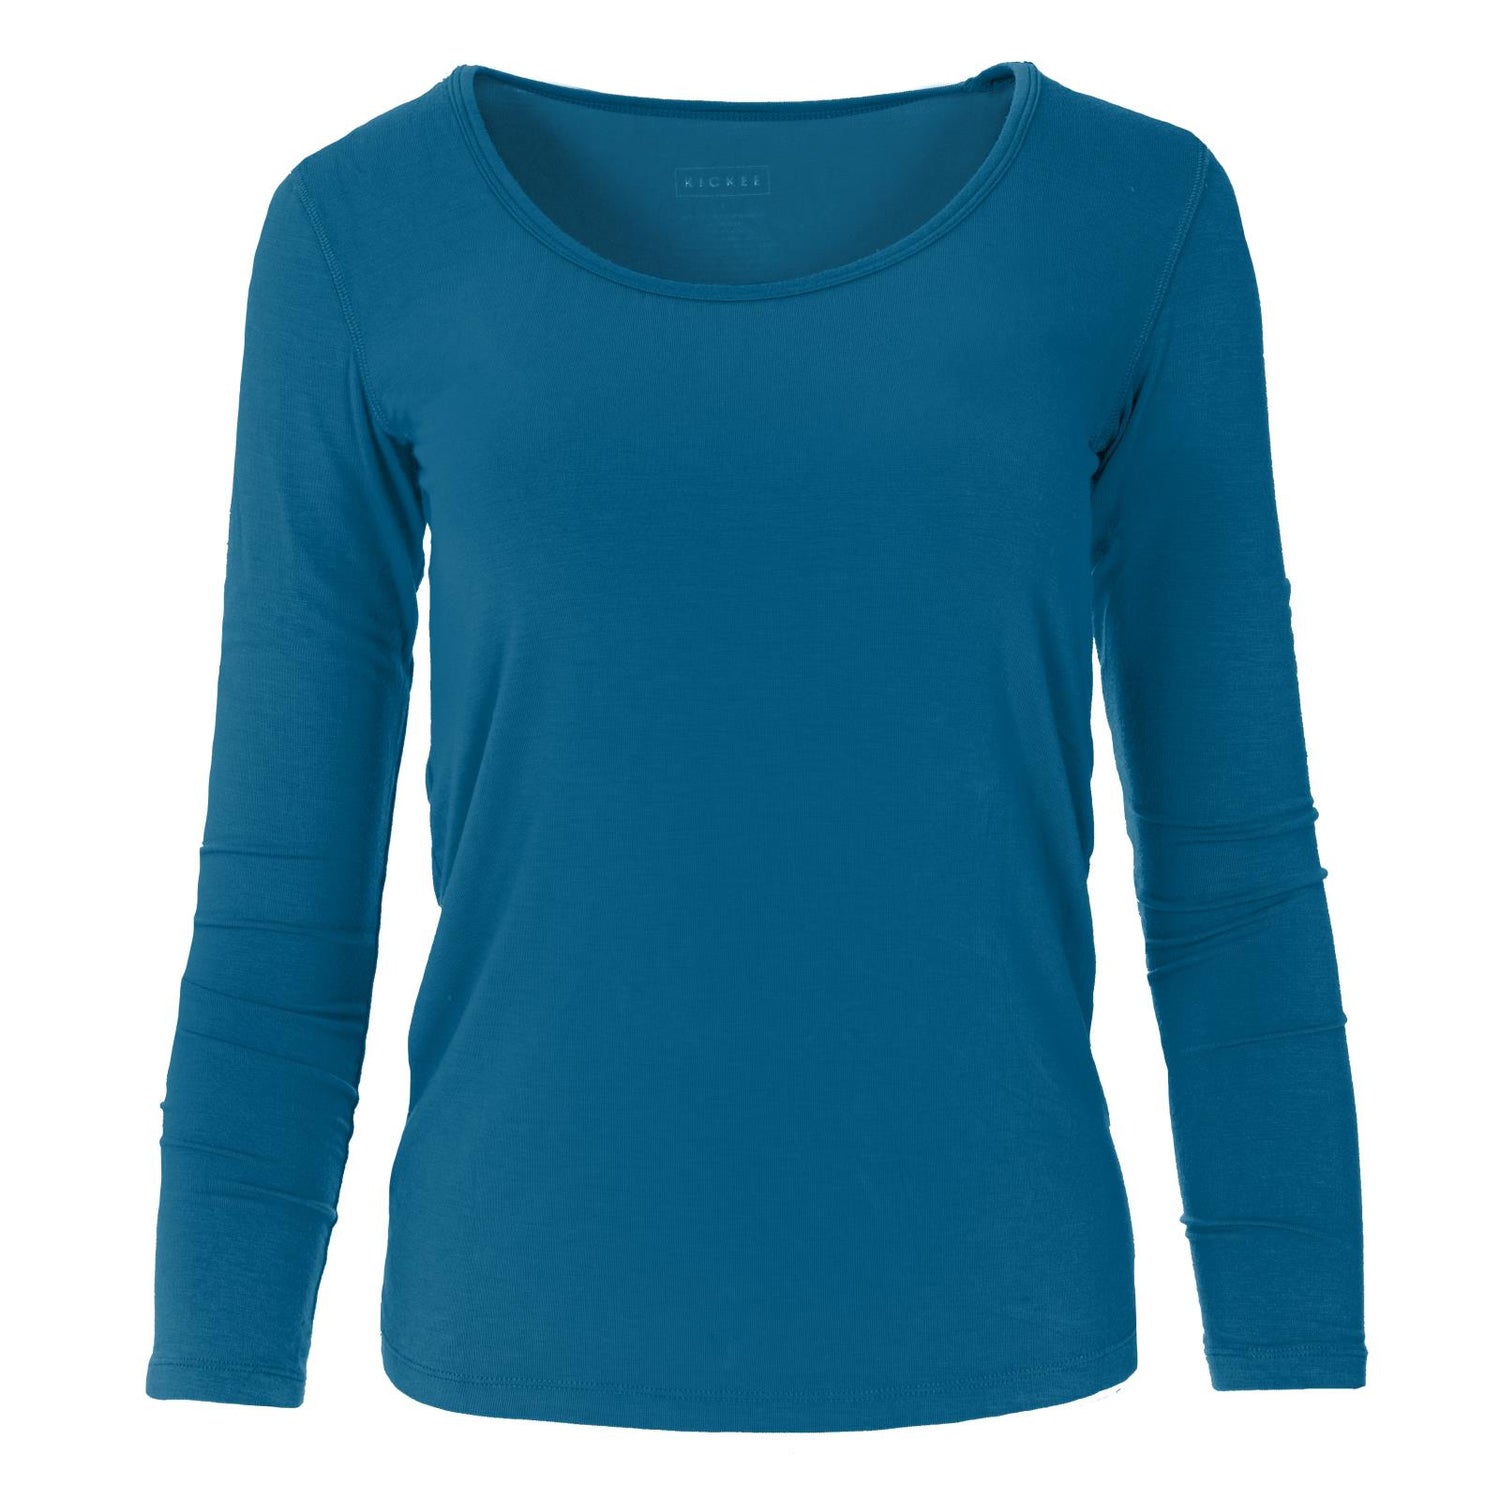 Women's Solid Long Sleeve Loosey Goosey Tee in Cerulean Blue